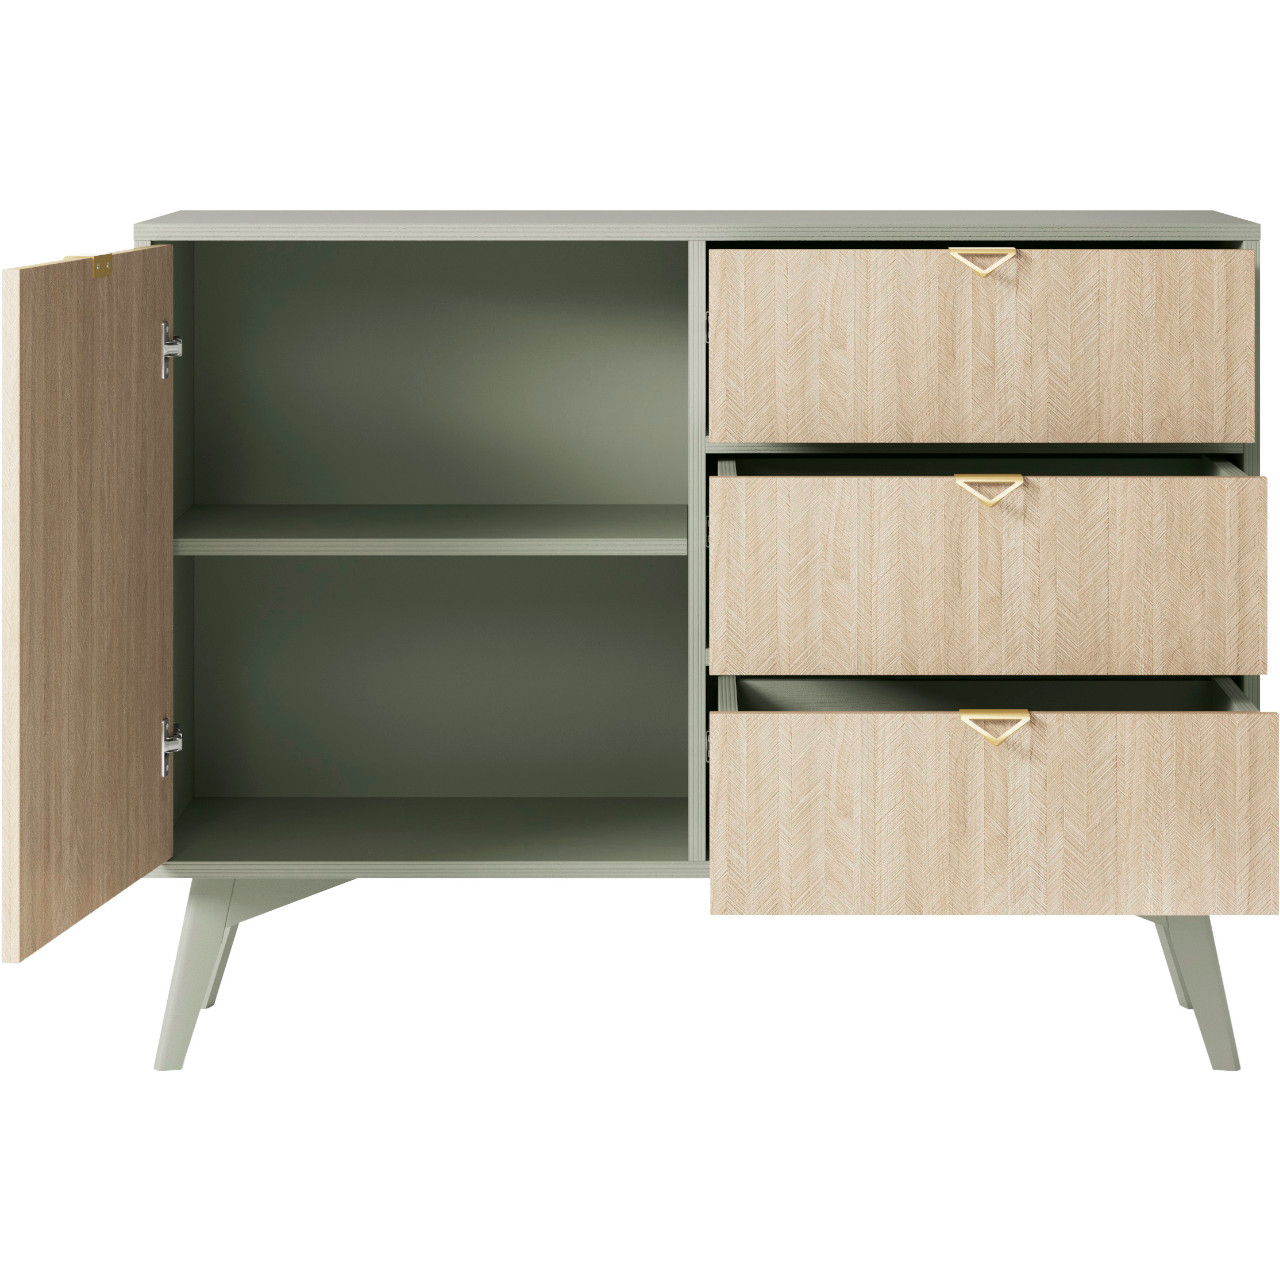 Storage cabinet WALD 03 eucalyptus / scandi